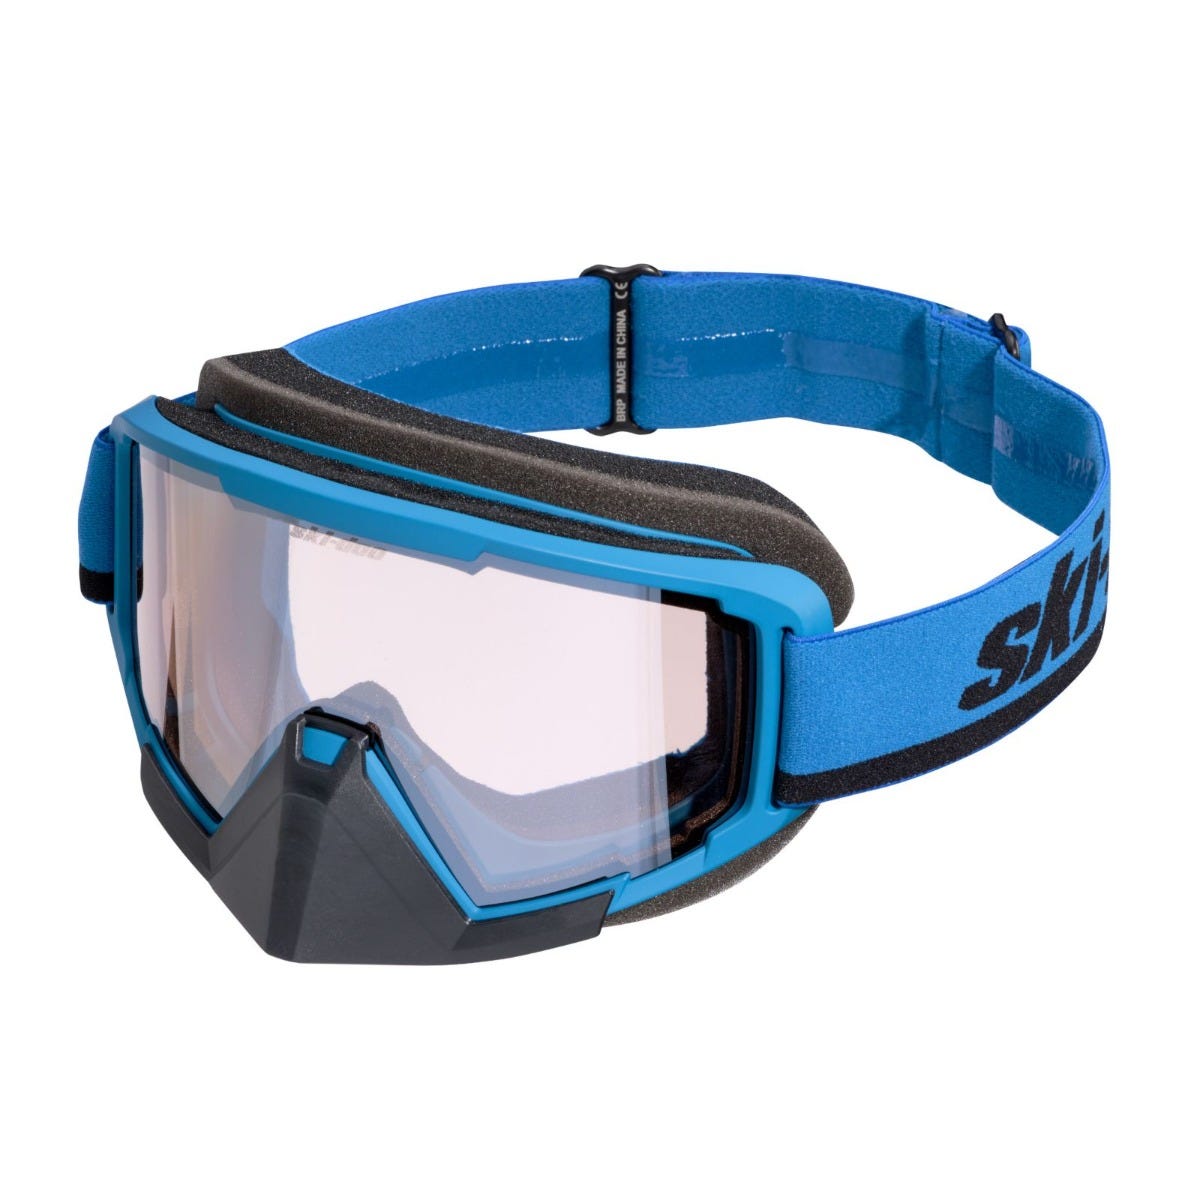 Ski-Doo Trench XL Goggles / Indigo Blue / Onesize